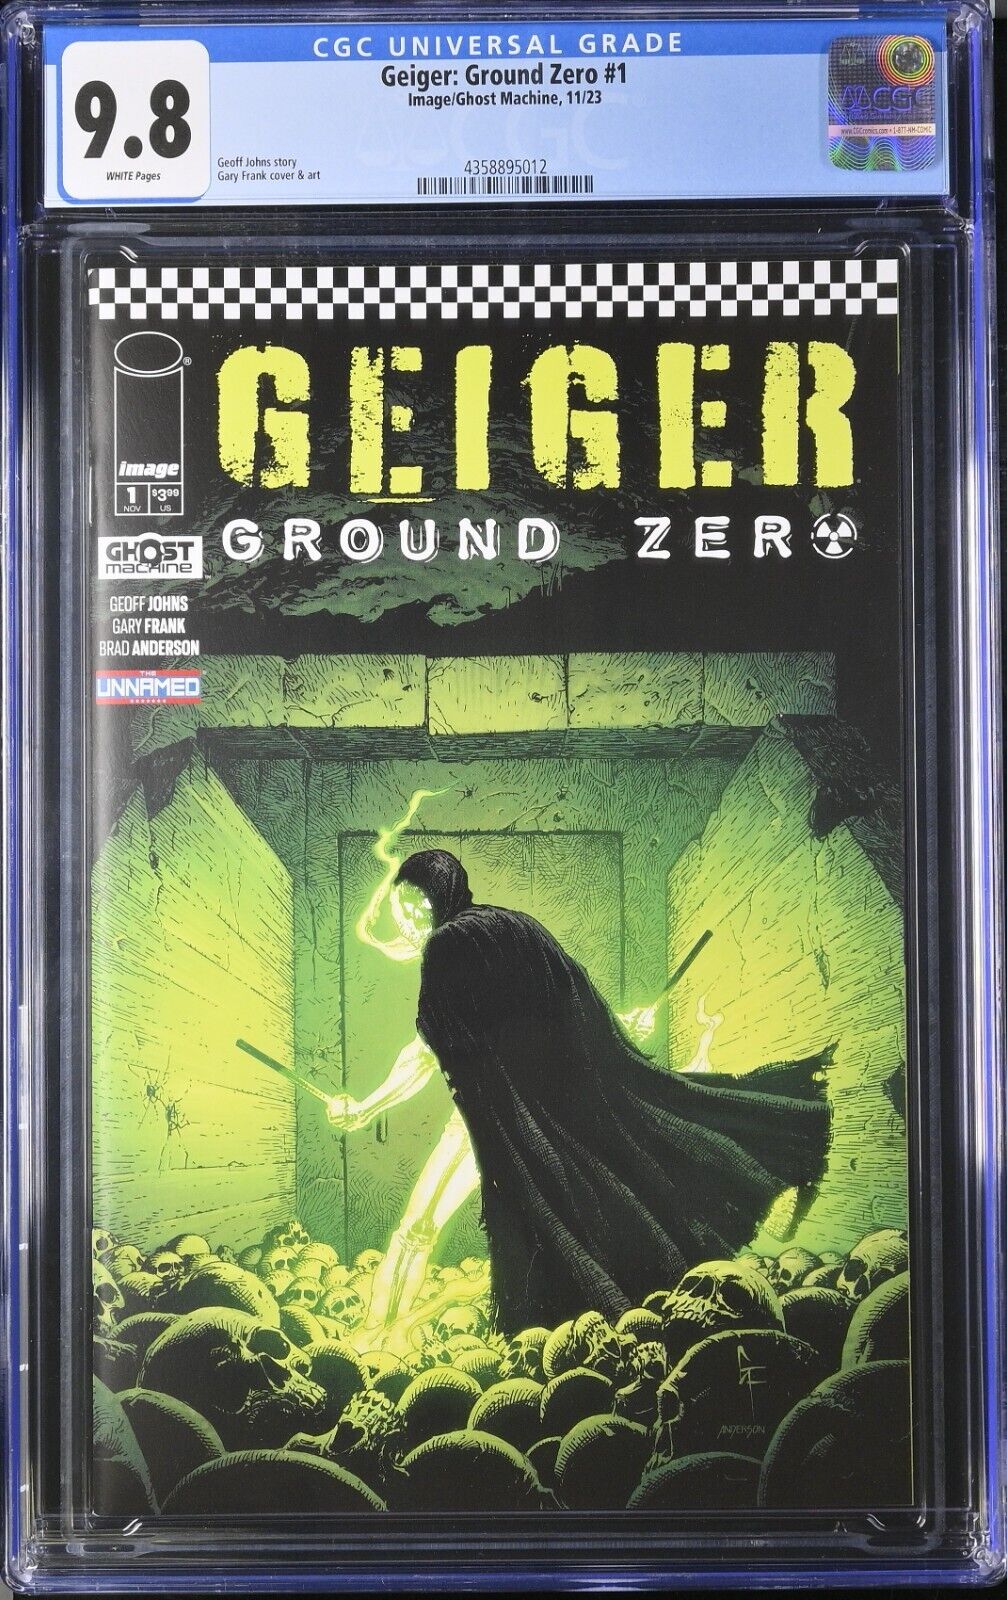 Geiger: Ground Zero #1 CGC 9.8 Gary Frank Cover A Image/Ghost Machine 2023 WP